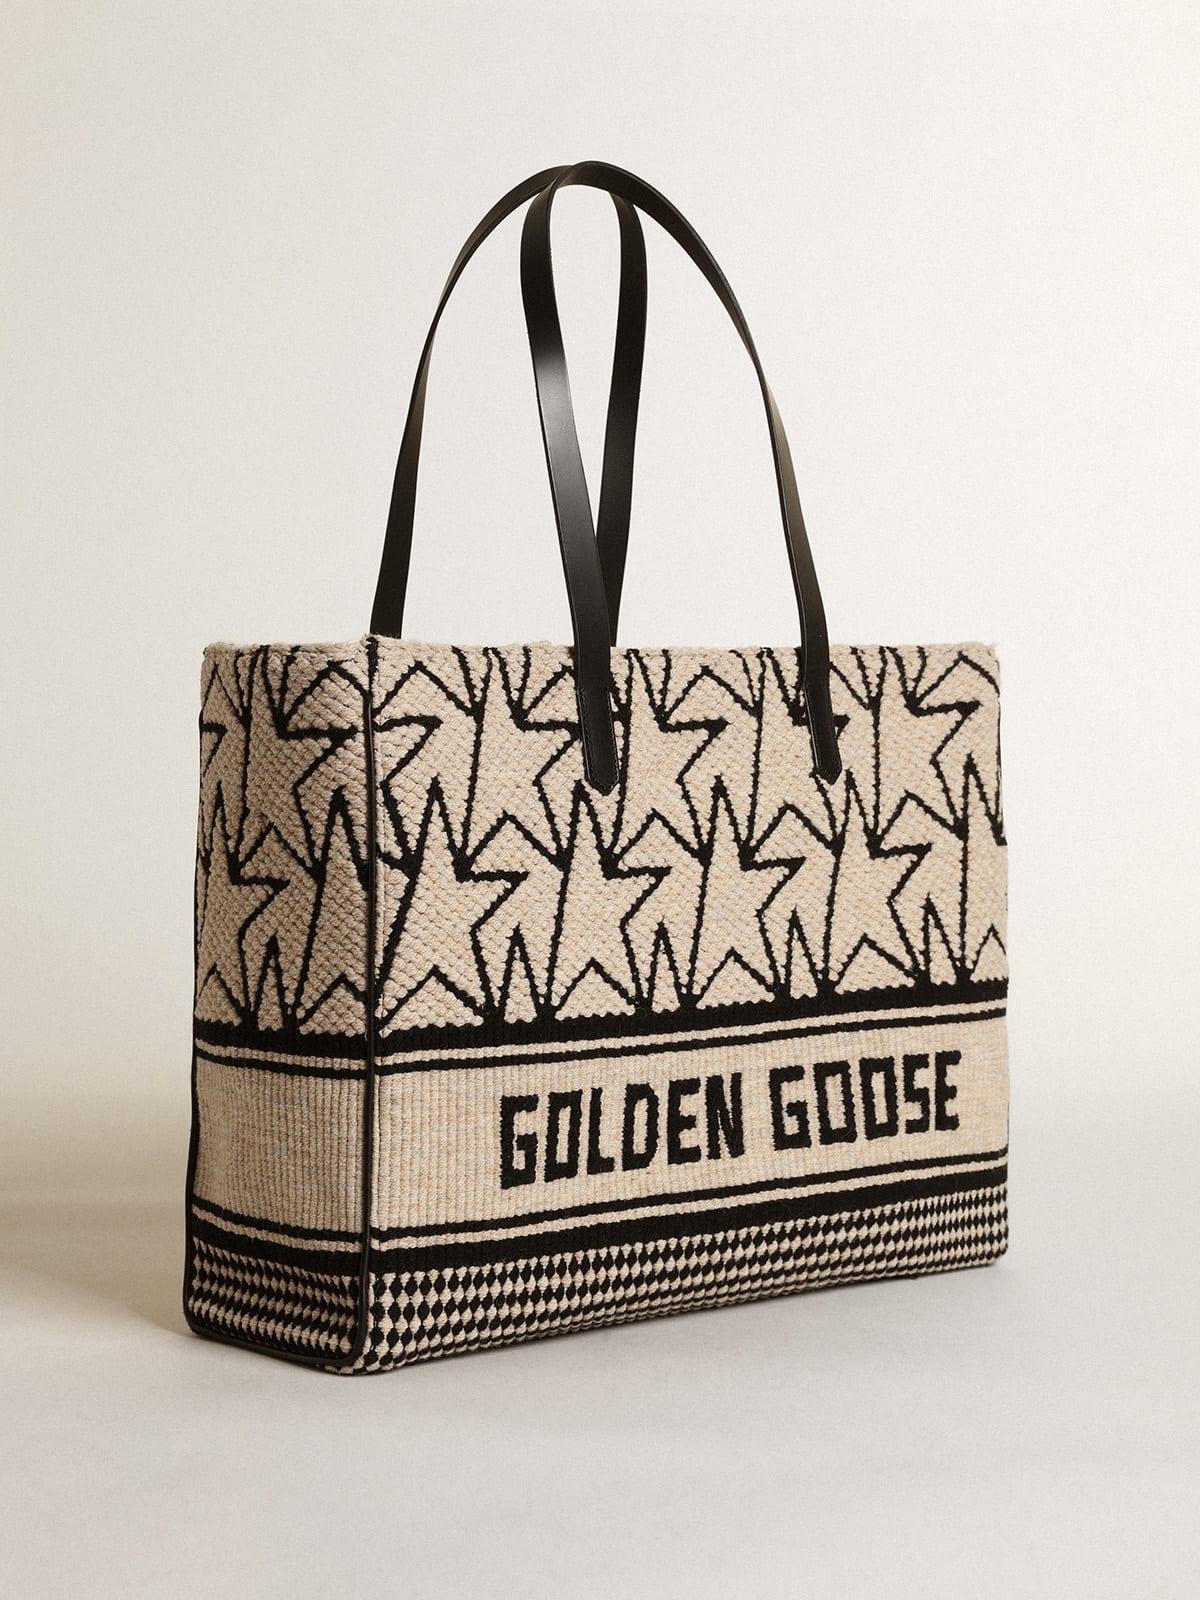 Golden Goose - 컨트라스팅 블랙 모노그램 & Golden Goose 레터링 밀크 화이트 자카드 울 E-W 캘리포니아백 in 